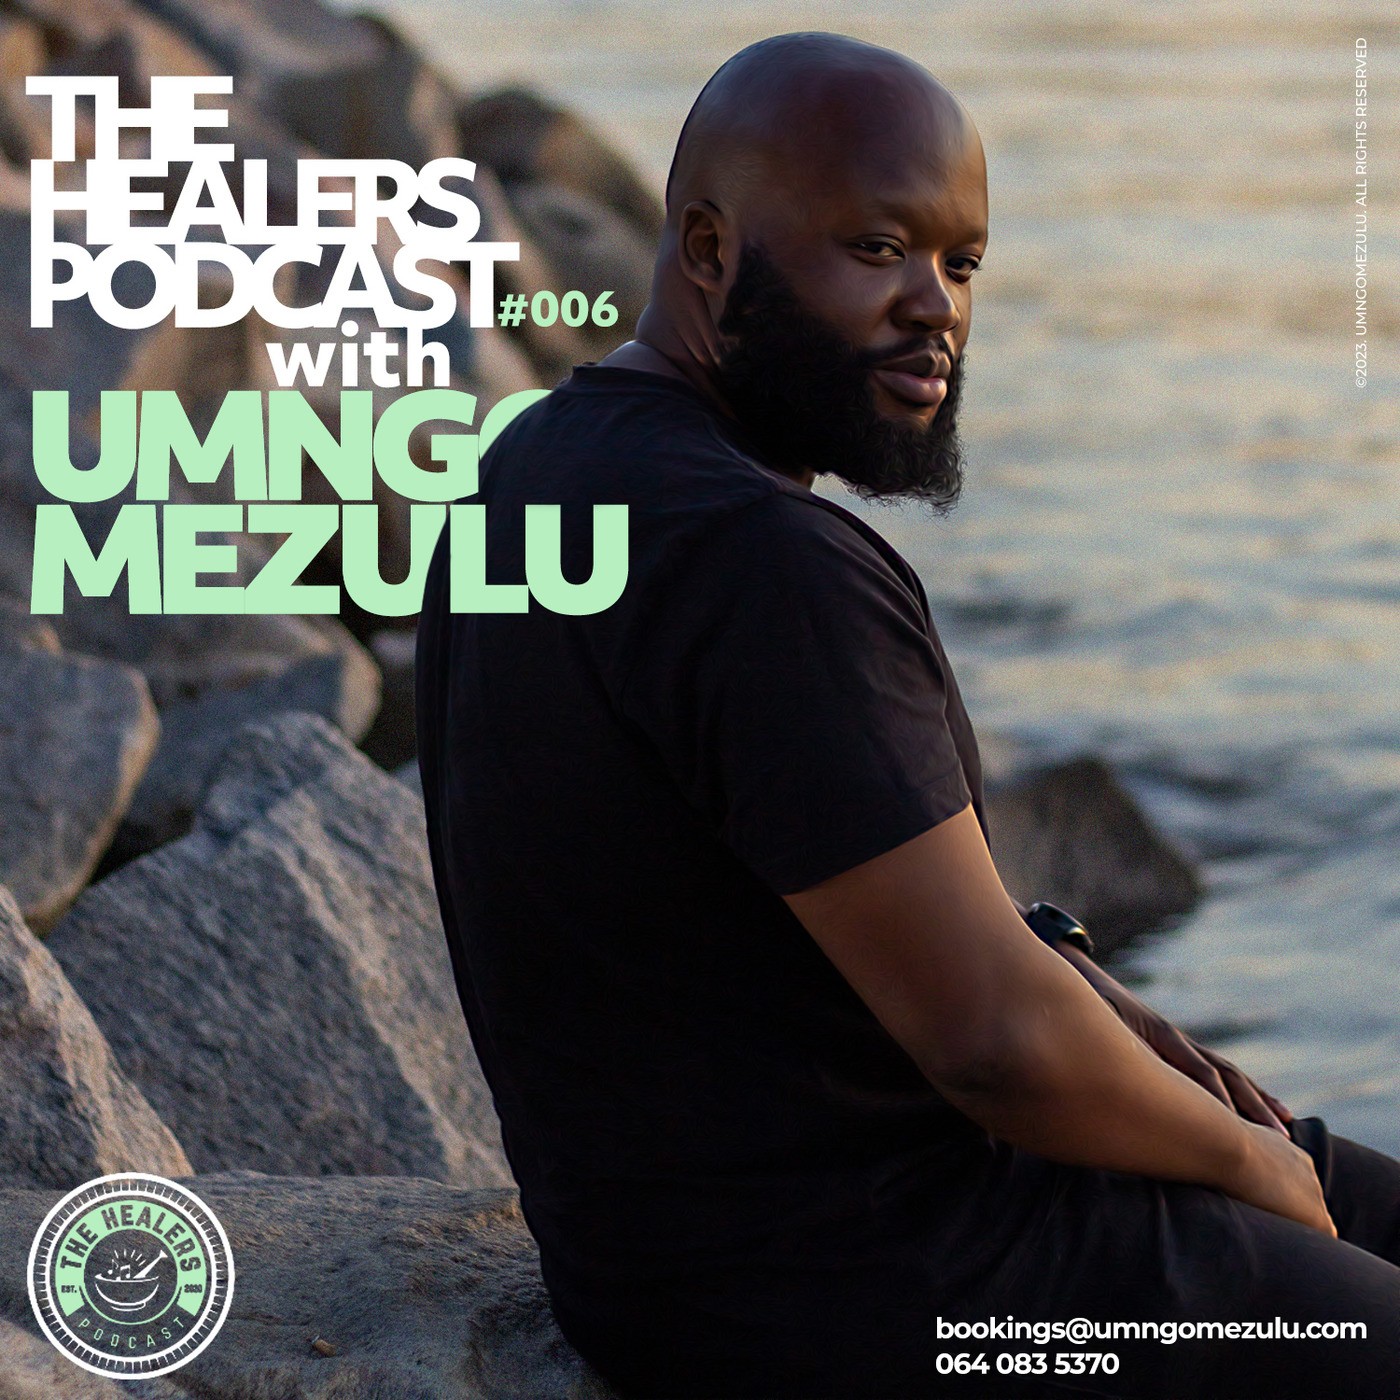 "Show 006" The Healers Podcast With UMngomezulu